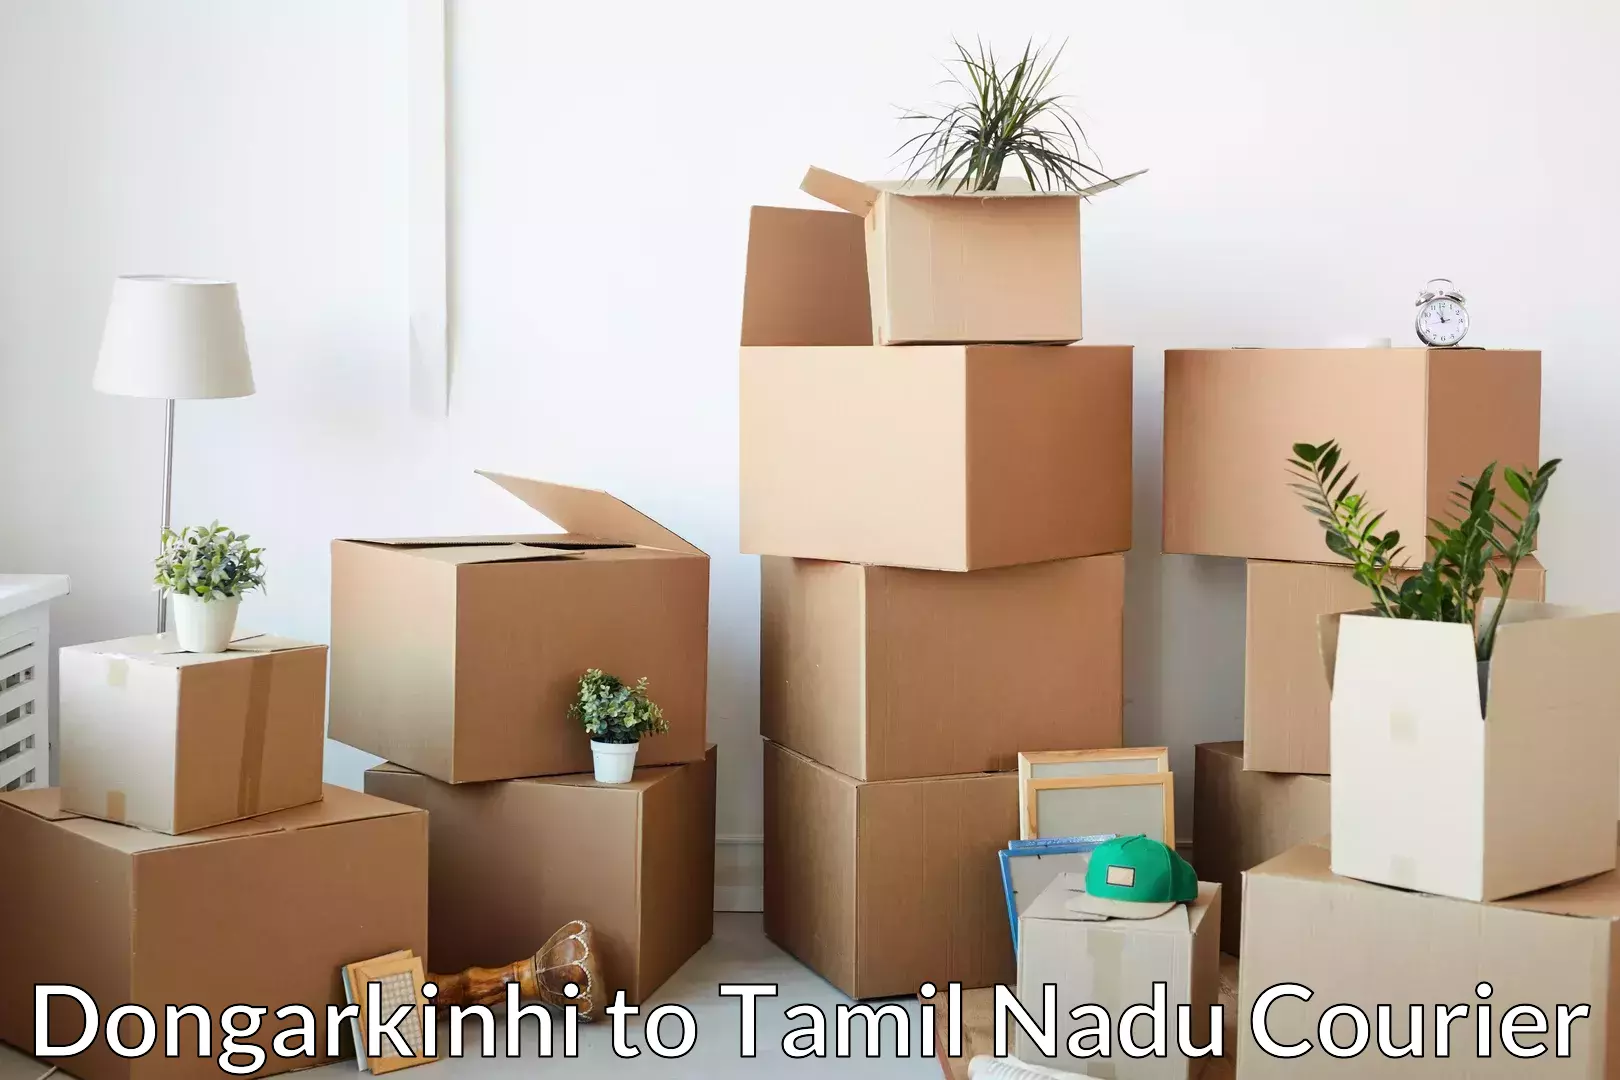 Full-service furniture transport in Dongarkinhi to Tamil Nadu